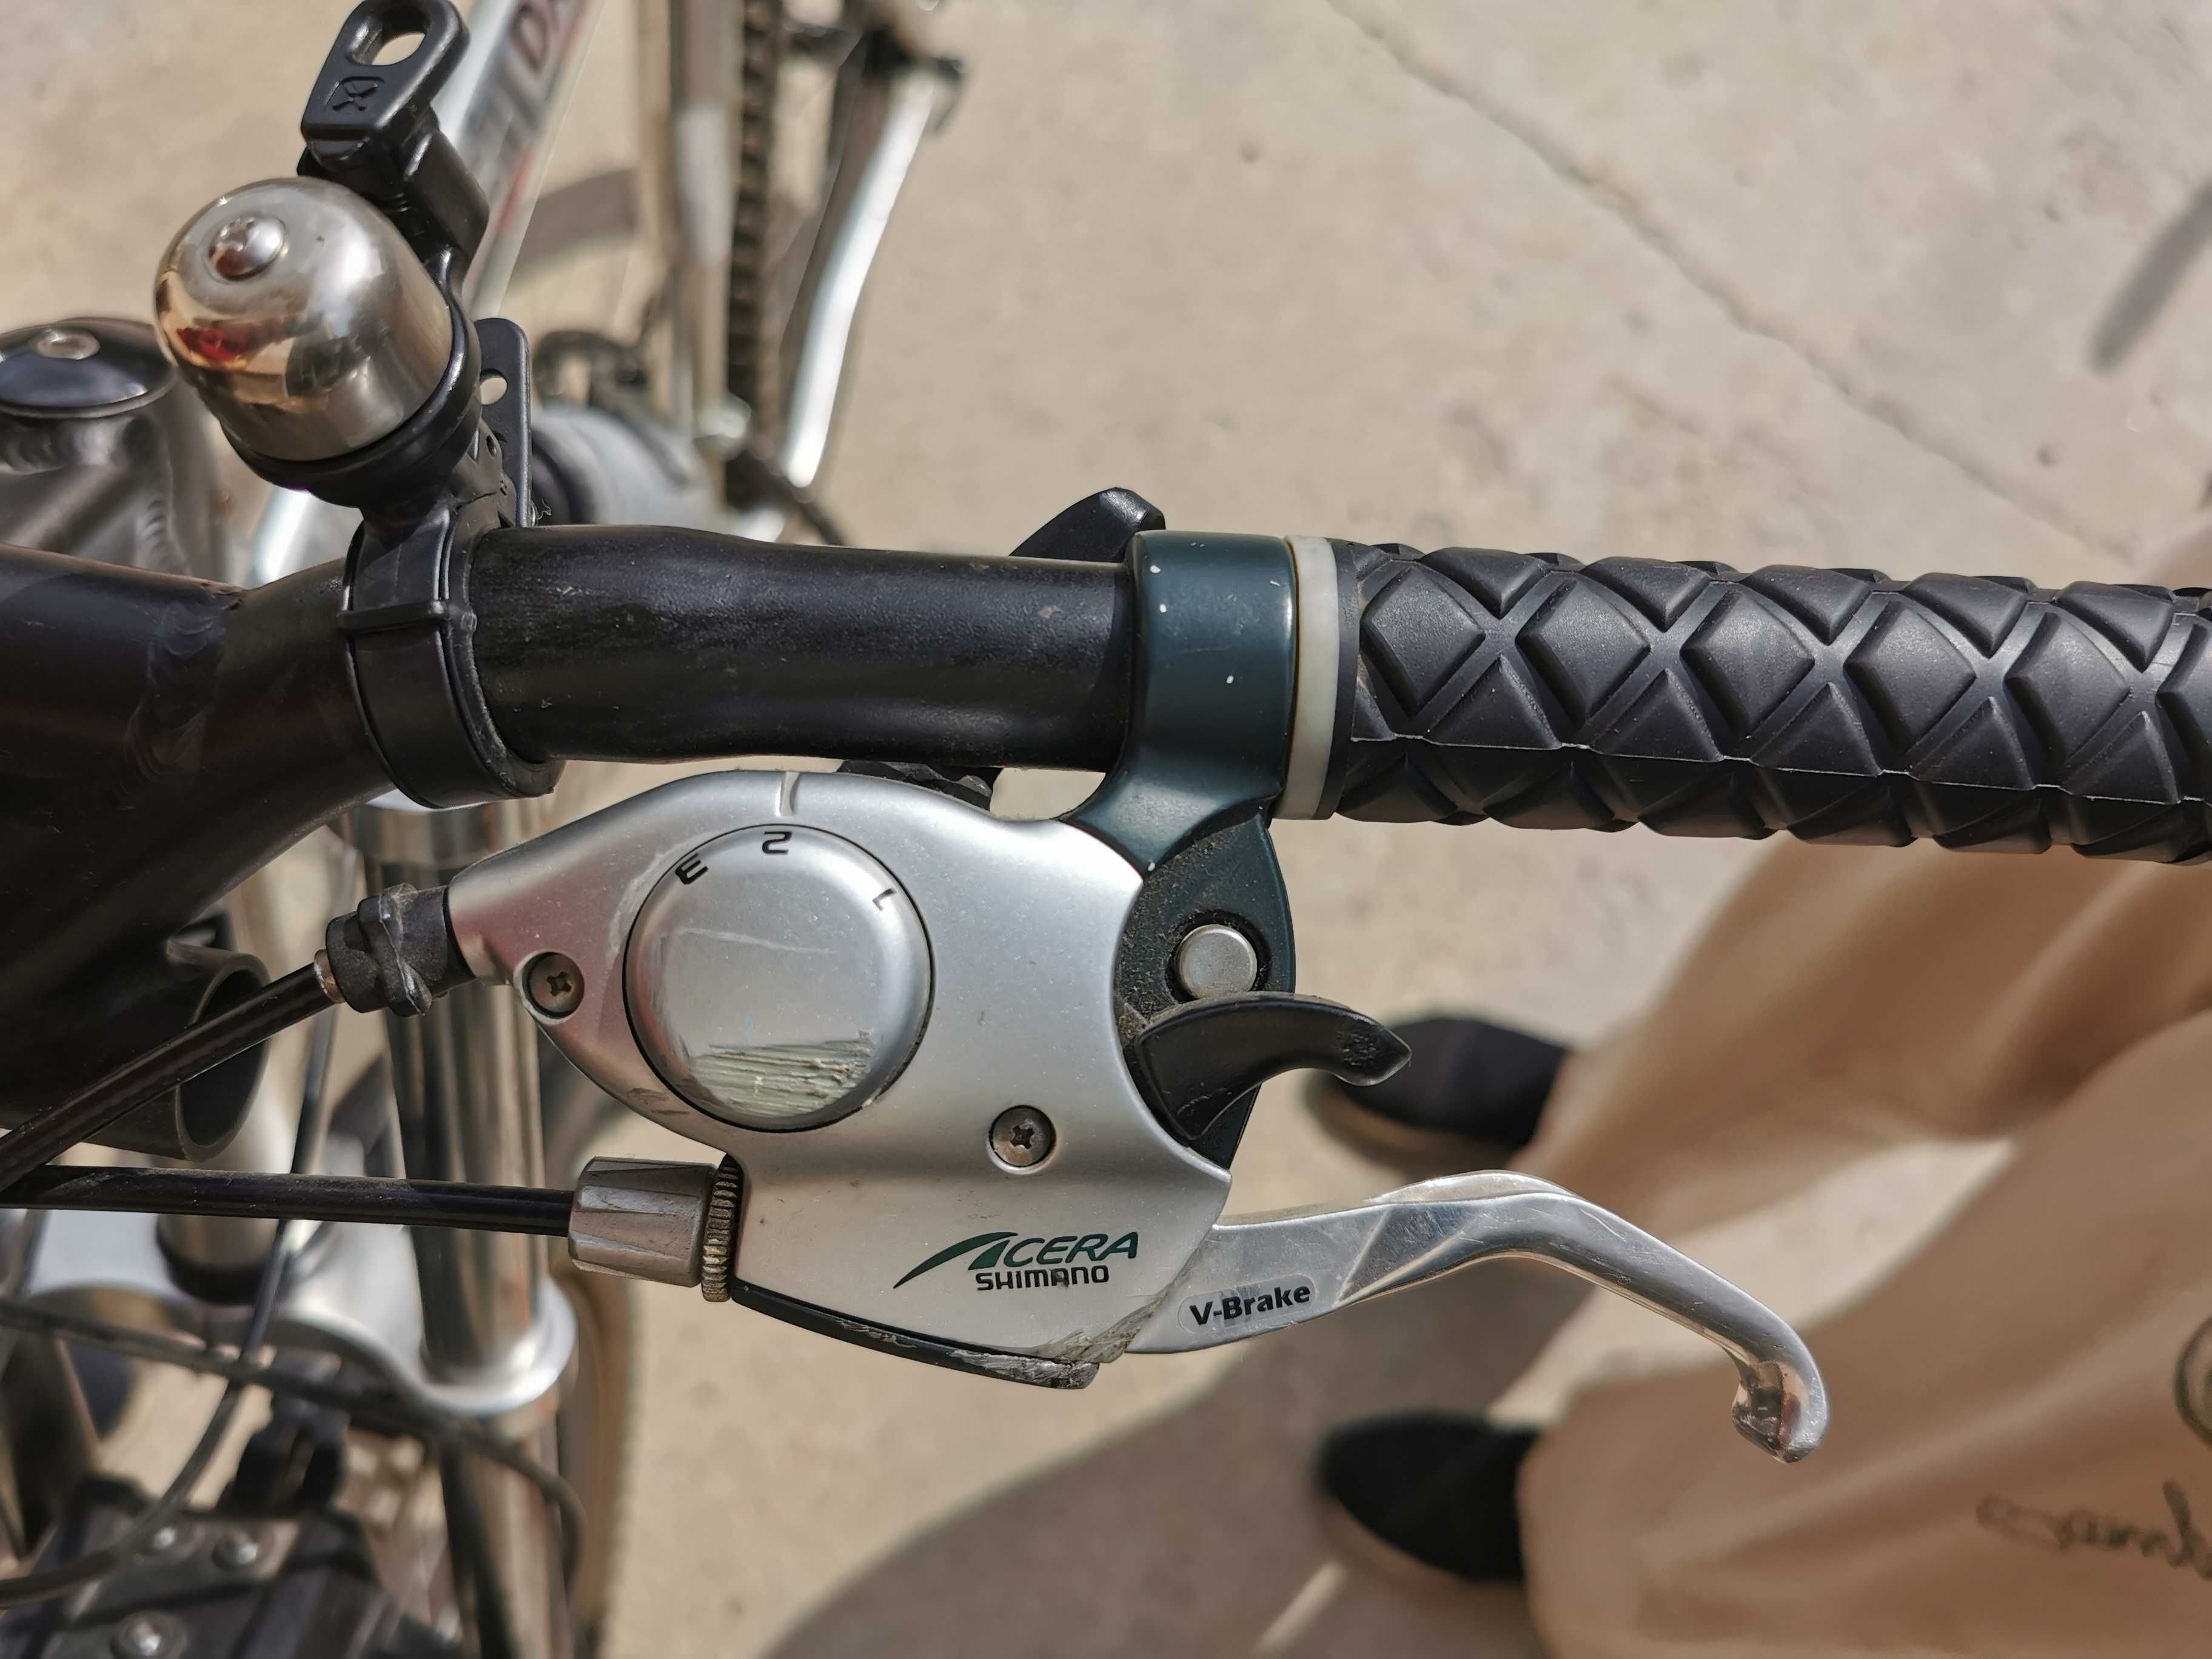 Bicicleta MTB (Mountain Bike) First Bike DX999 Special Edition 26 inch